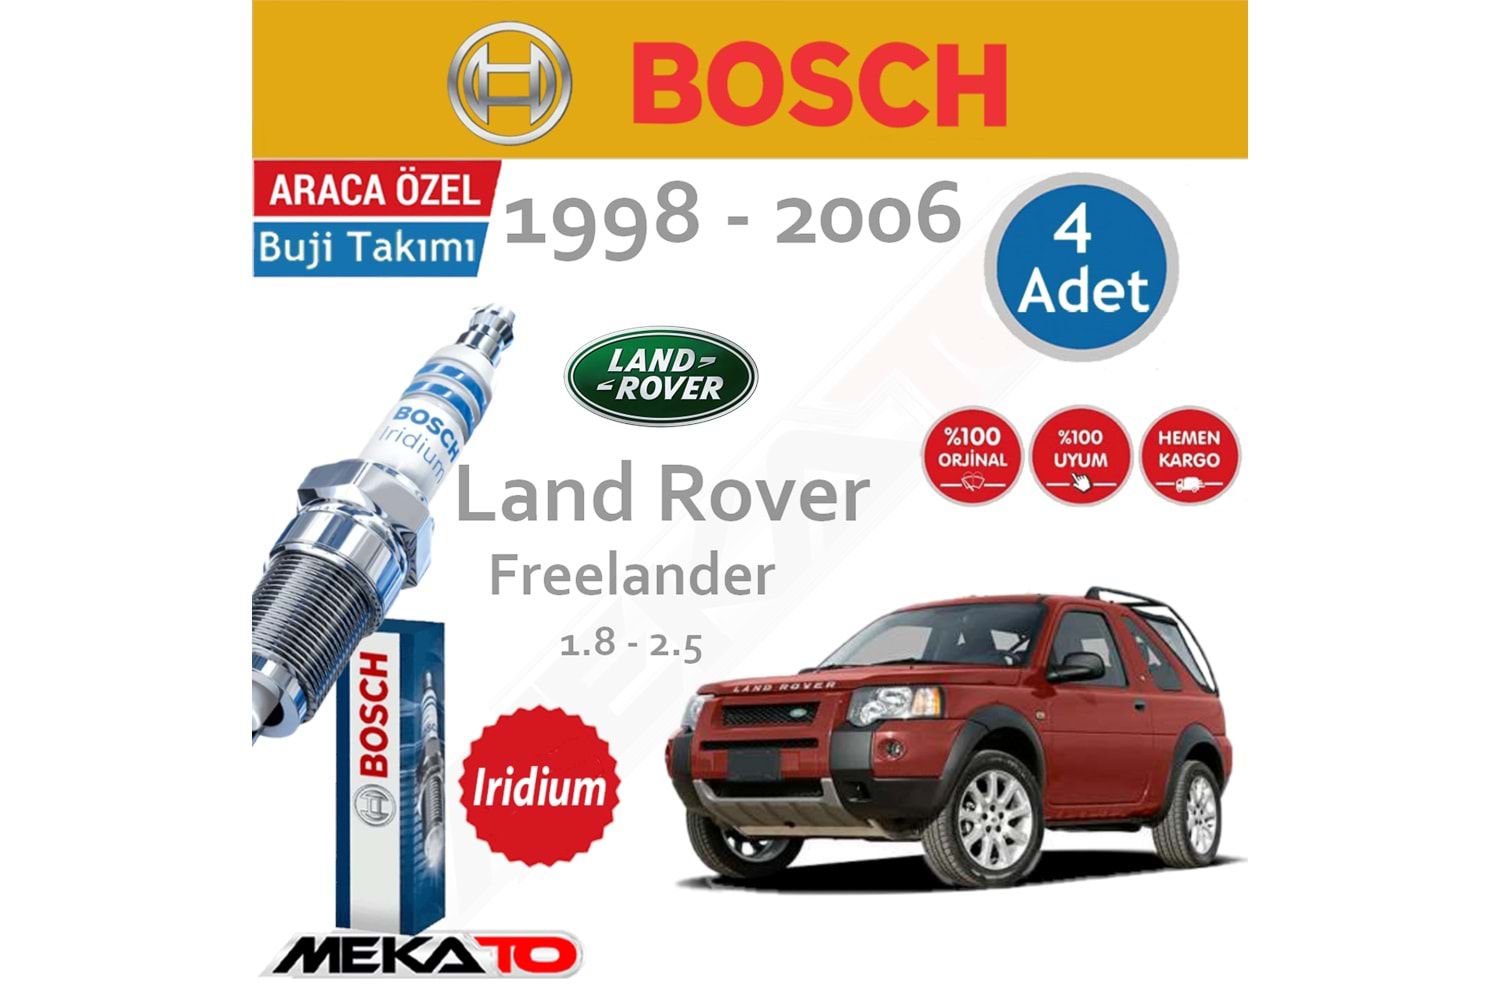 Bosch Land Rover Freelander Lpg (1.8-2.5) İridyum (1998-2006) Buji Takımı 4 Ad.